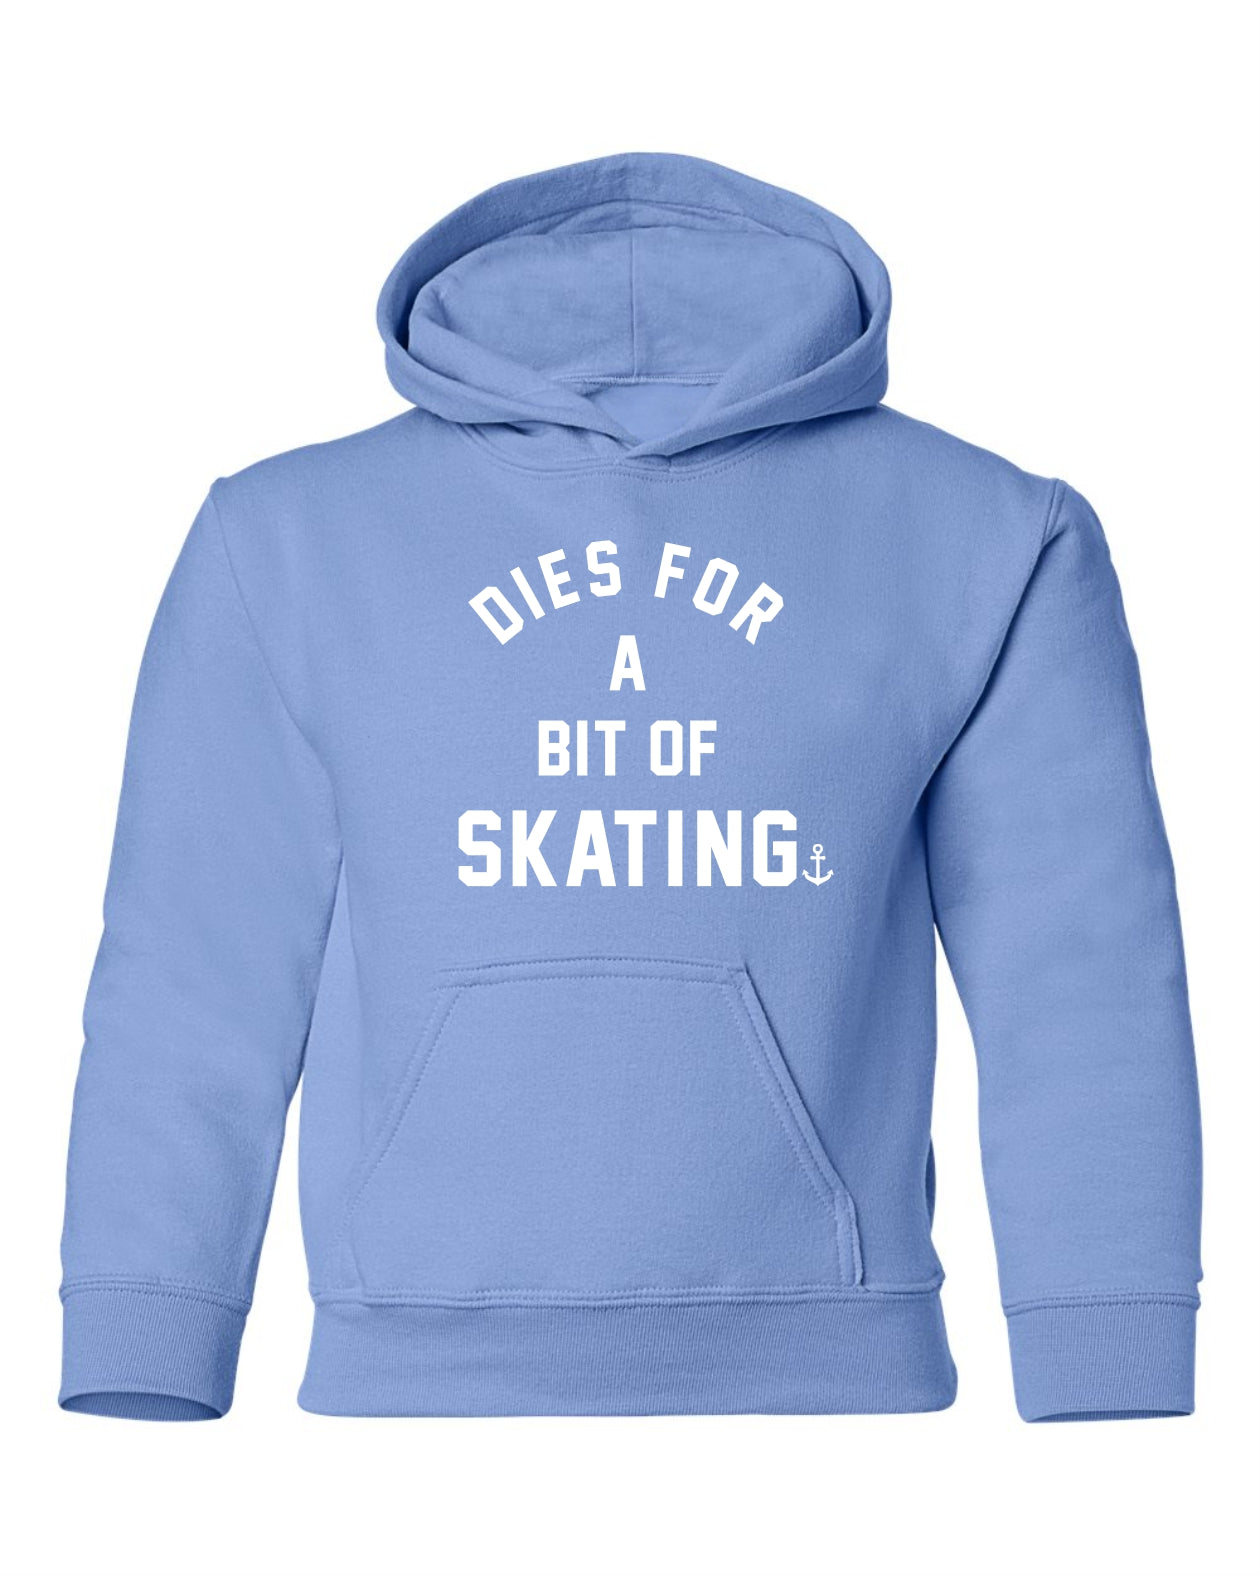 "Dies For A Bit Of Skating" Youth Hoodie